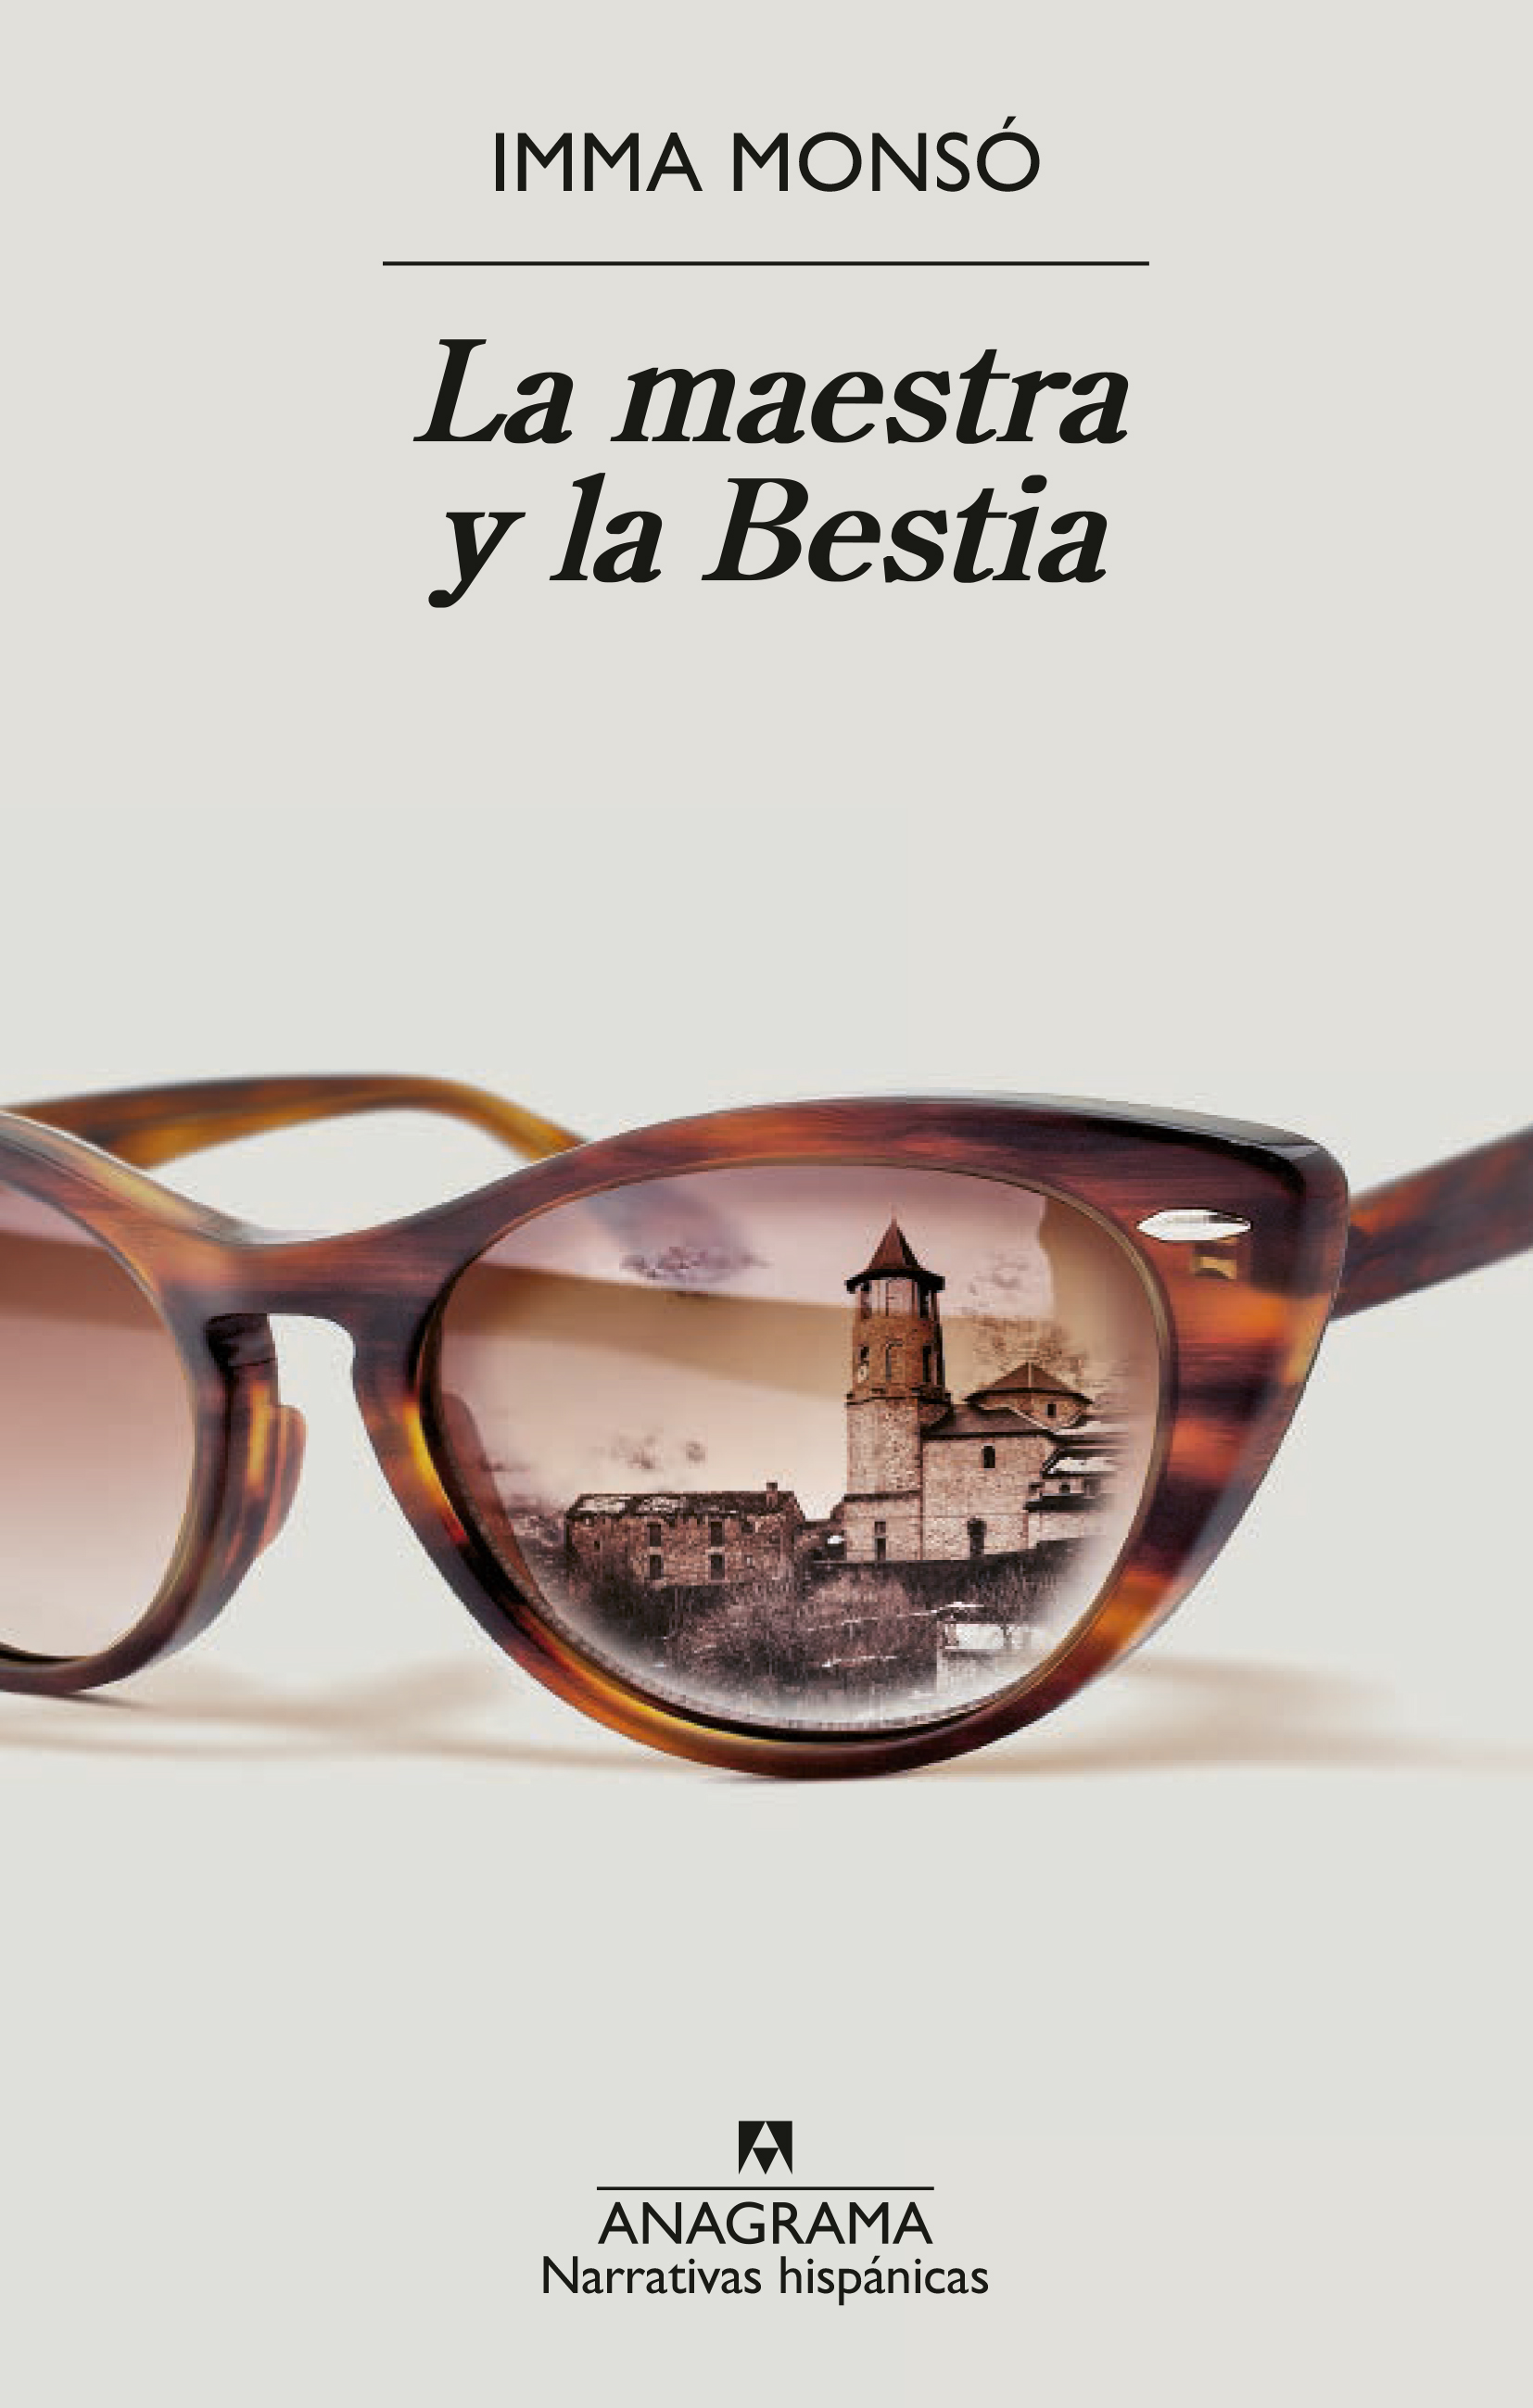 La maestra y la Bestia - Monsó, Imma - 978-84-339-0179-8 - Editorial  Anagrama